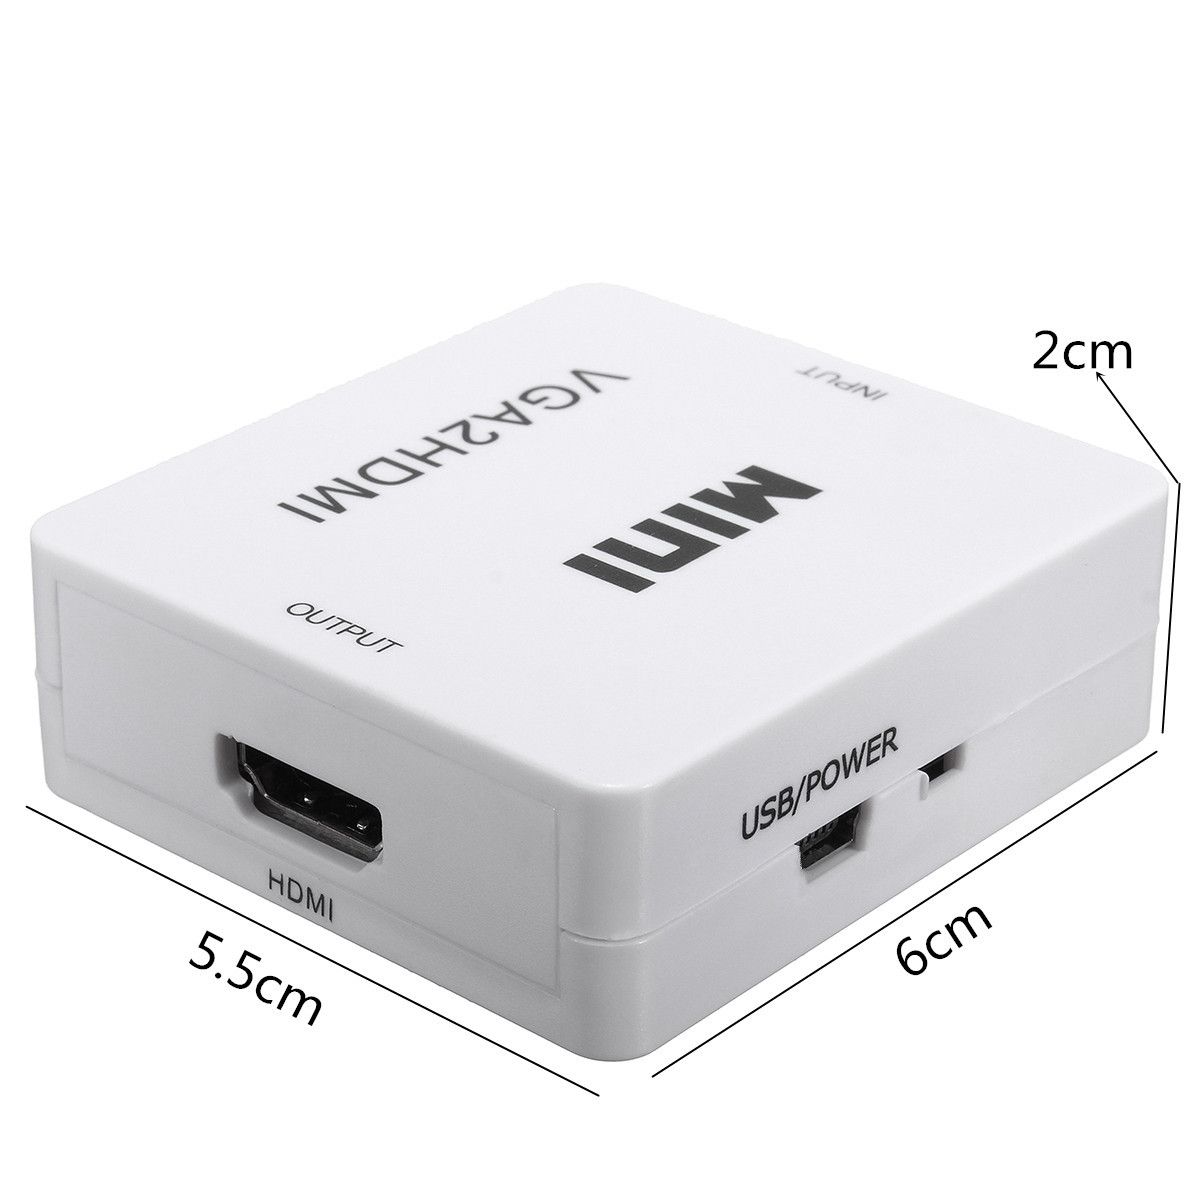 1080P-Mini-VGA-To-HD-Audio-Video-Converter-Box-Adapter-For-HDTV-PC-Laptop-DVD-1099890